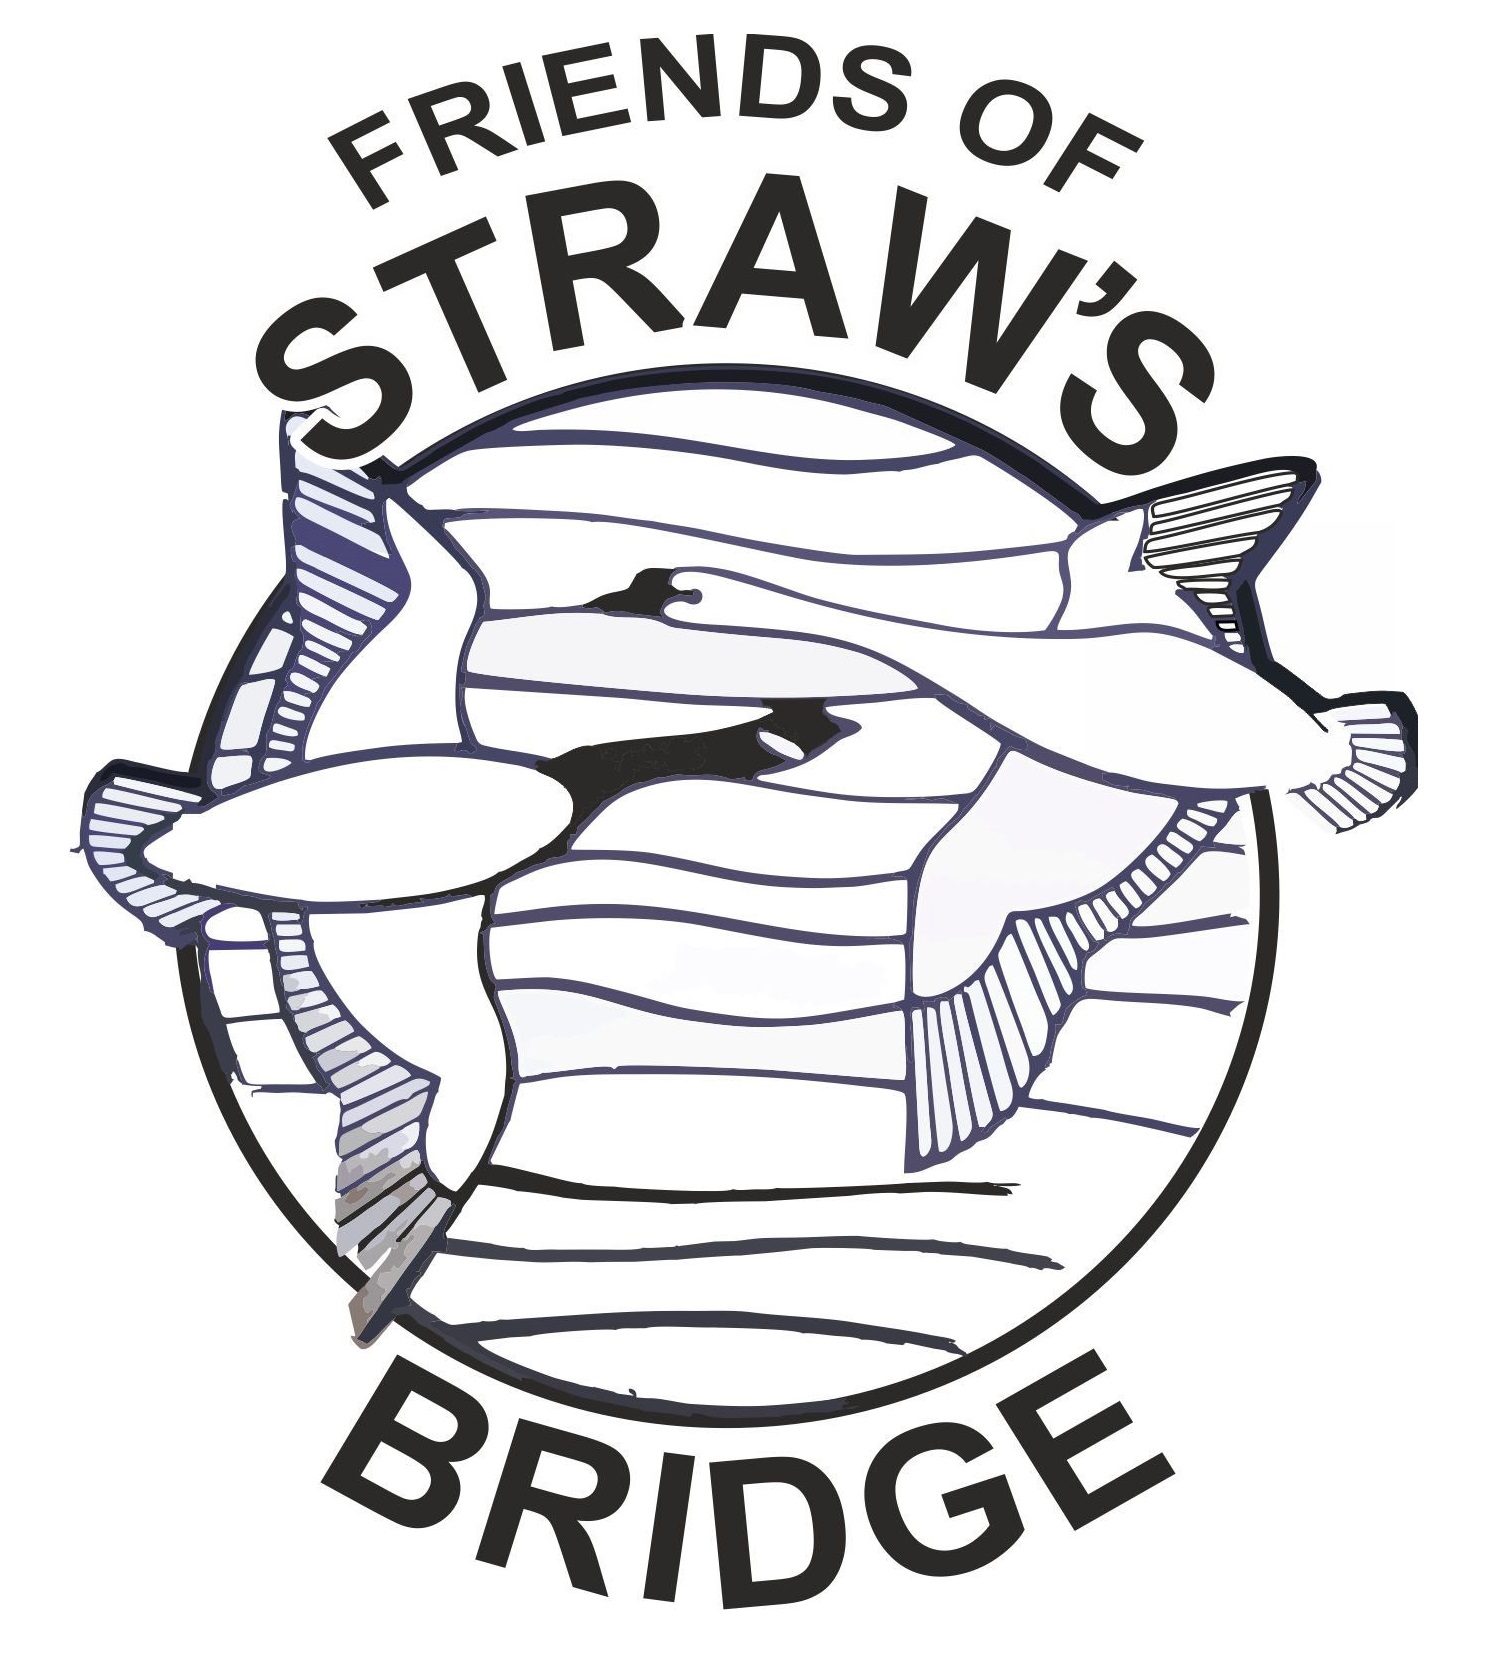 Straw's Bridge logo